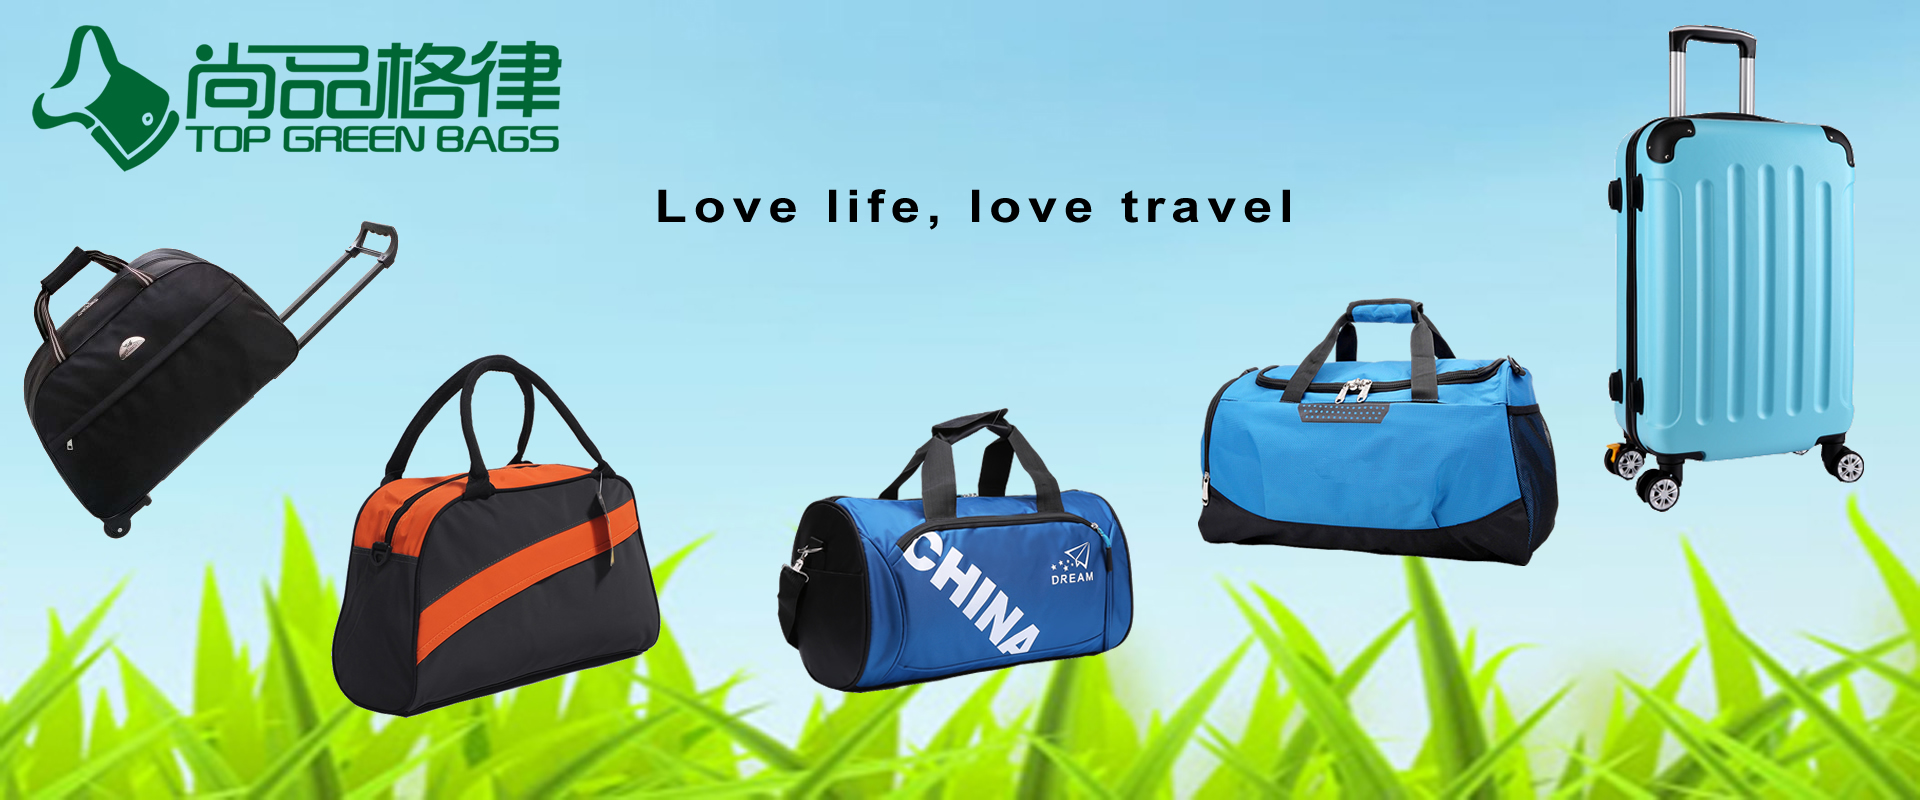 travel bag & suitcases